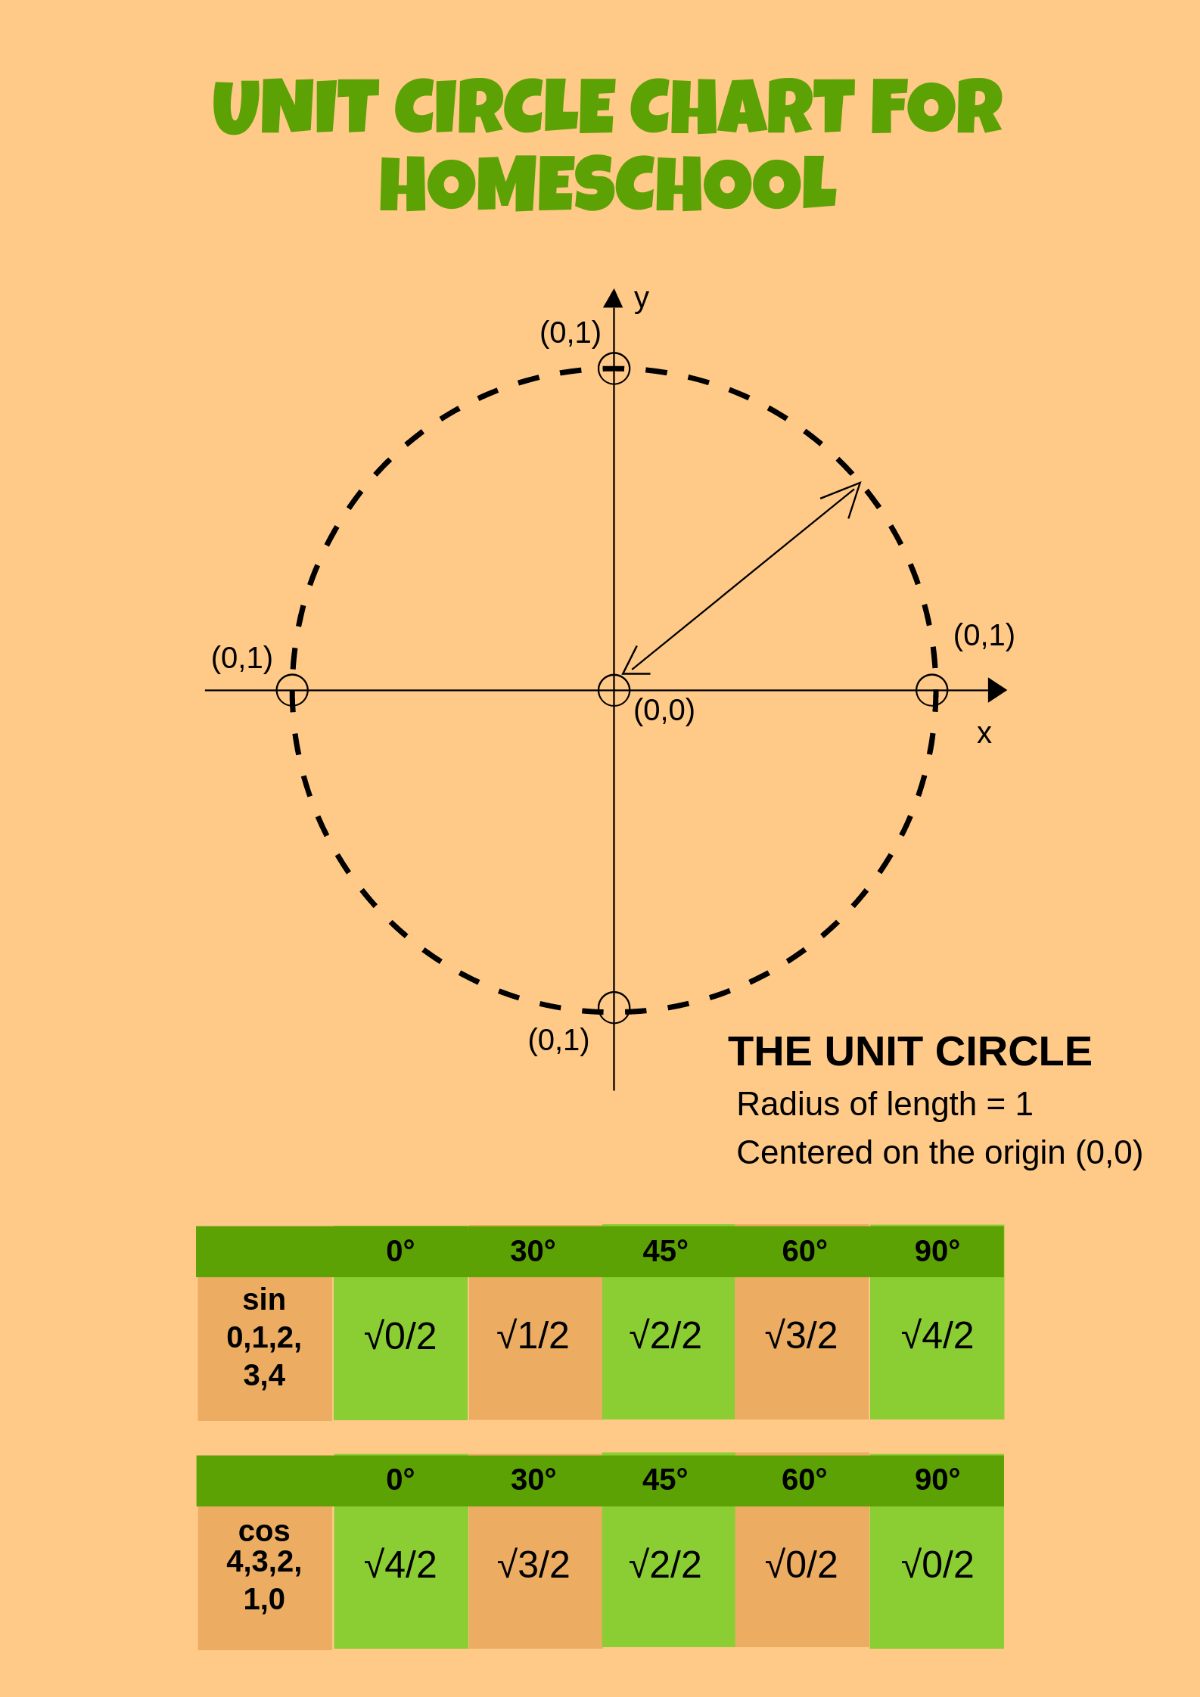 The Unit Circle Chart For Homeschool